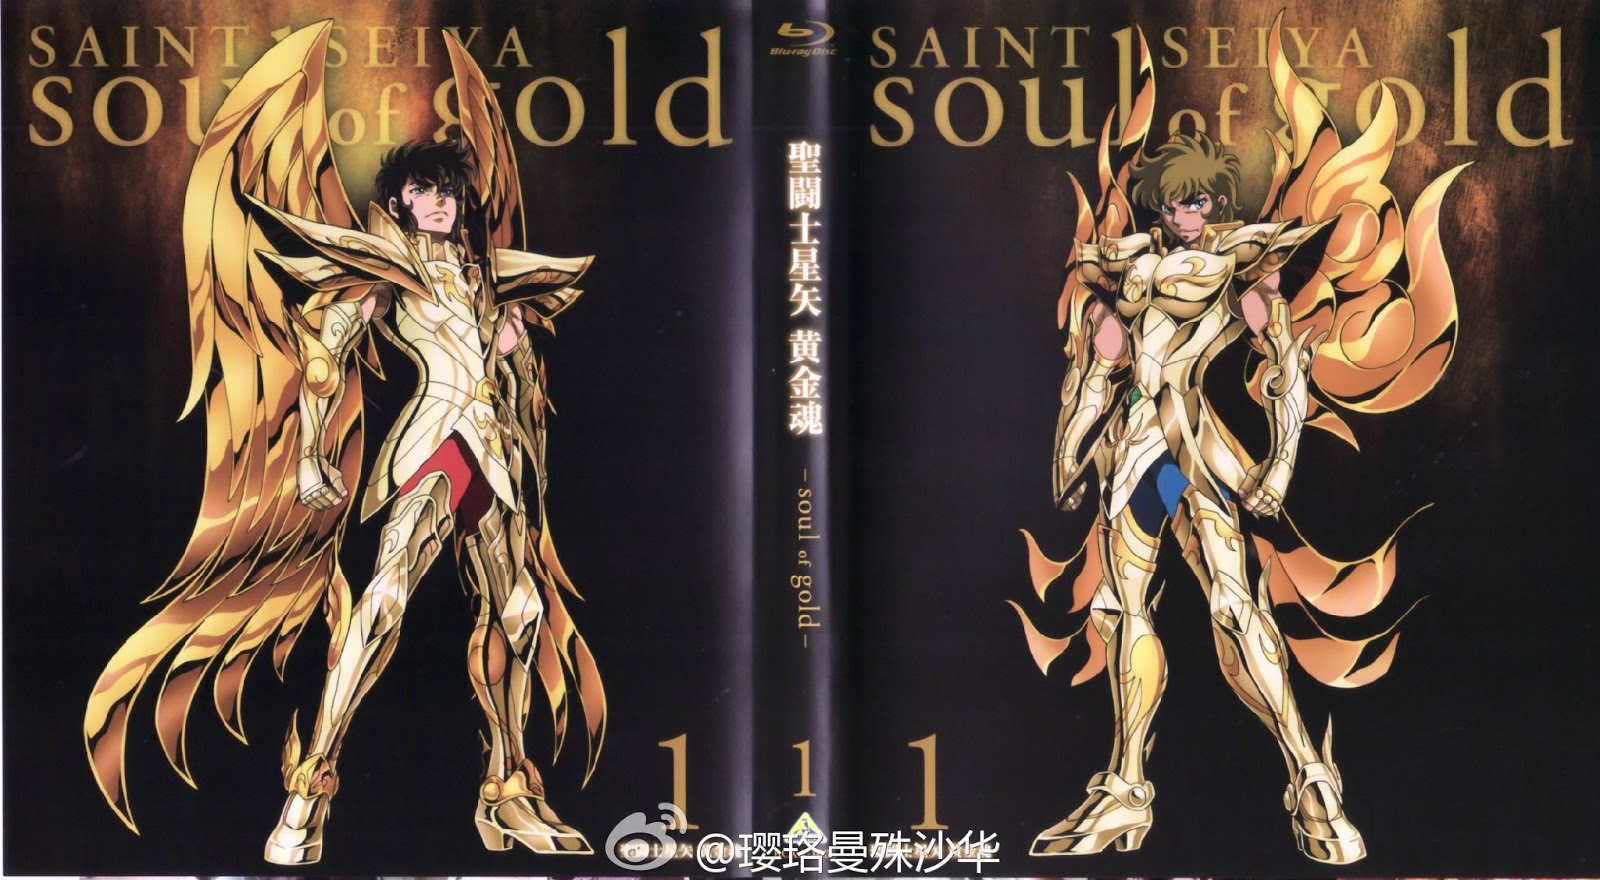 PROMOCION PORTADAS DEL PRIMER BLURAY DVD DE SOUL OF GOLD EN JAPON